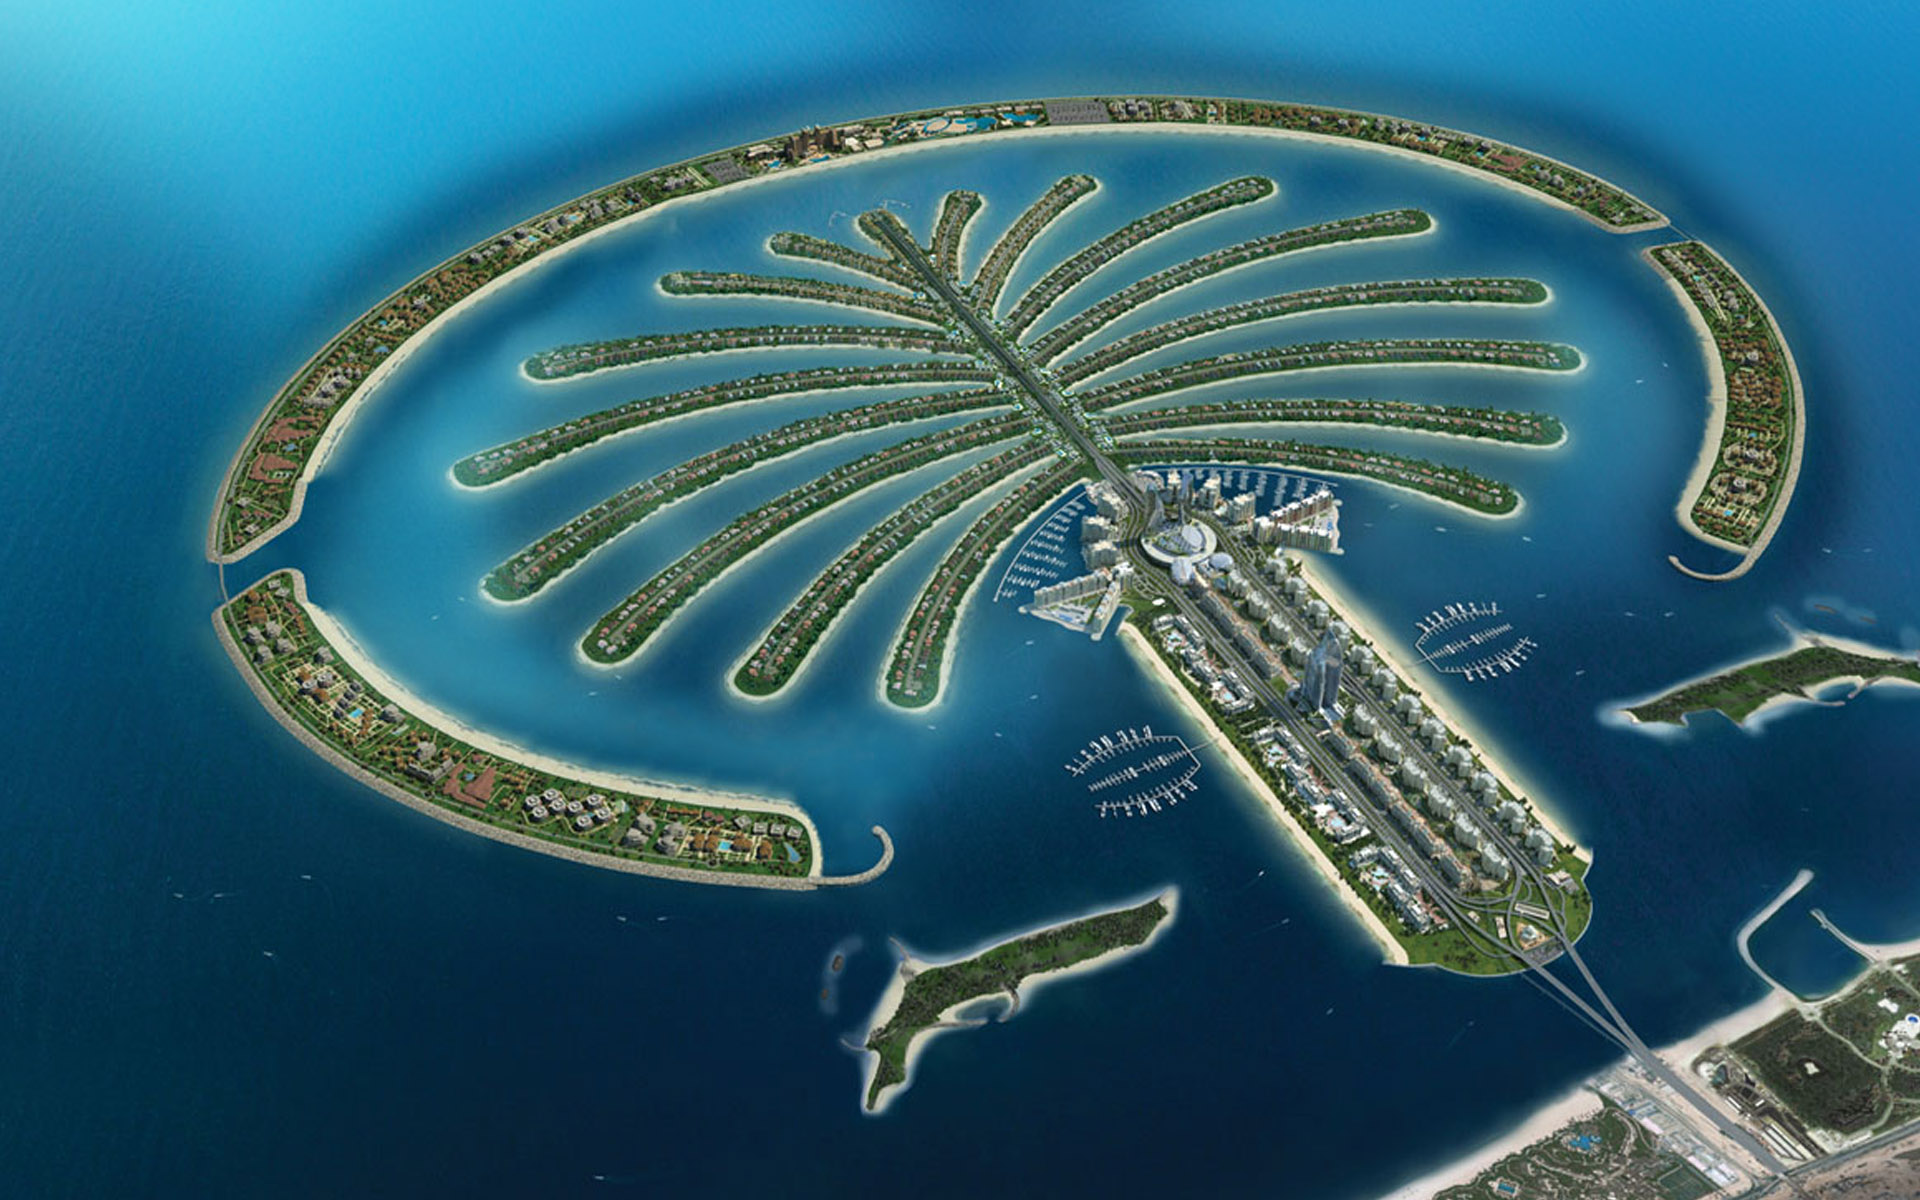 Palm Jumeirah Island architectural masterpiece in Dubai